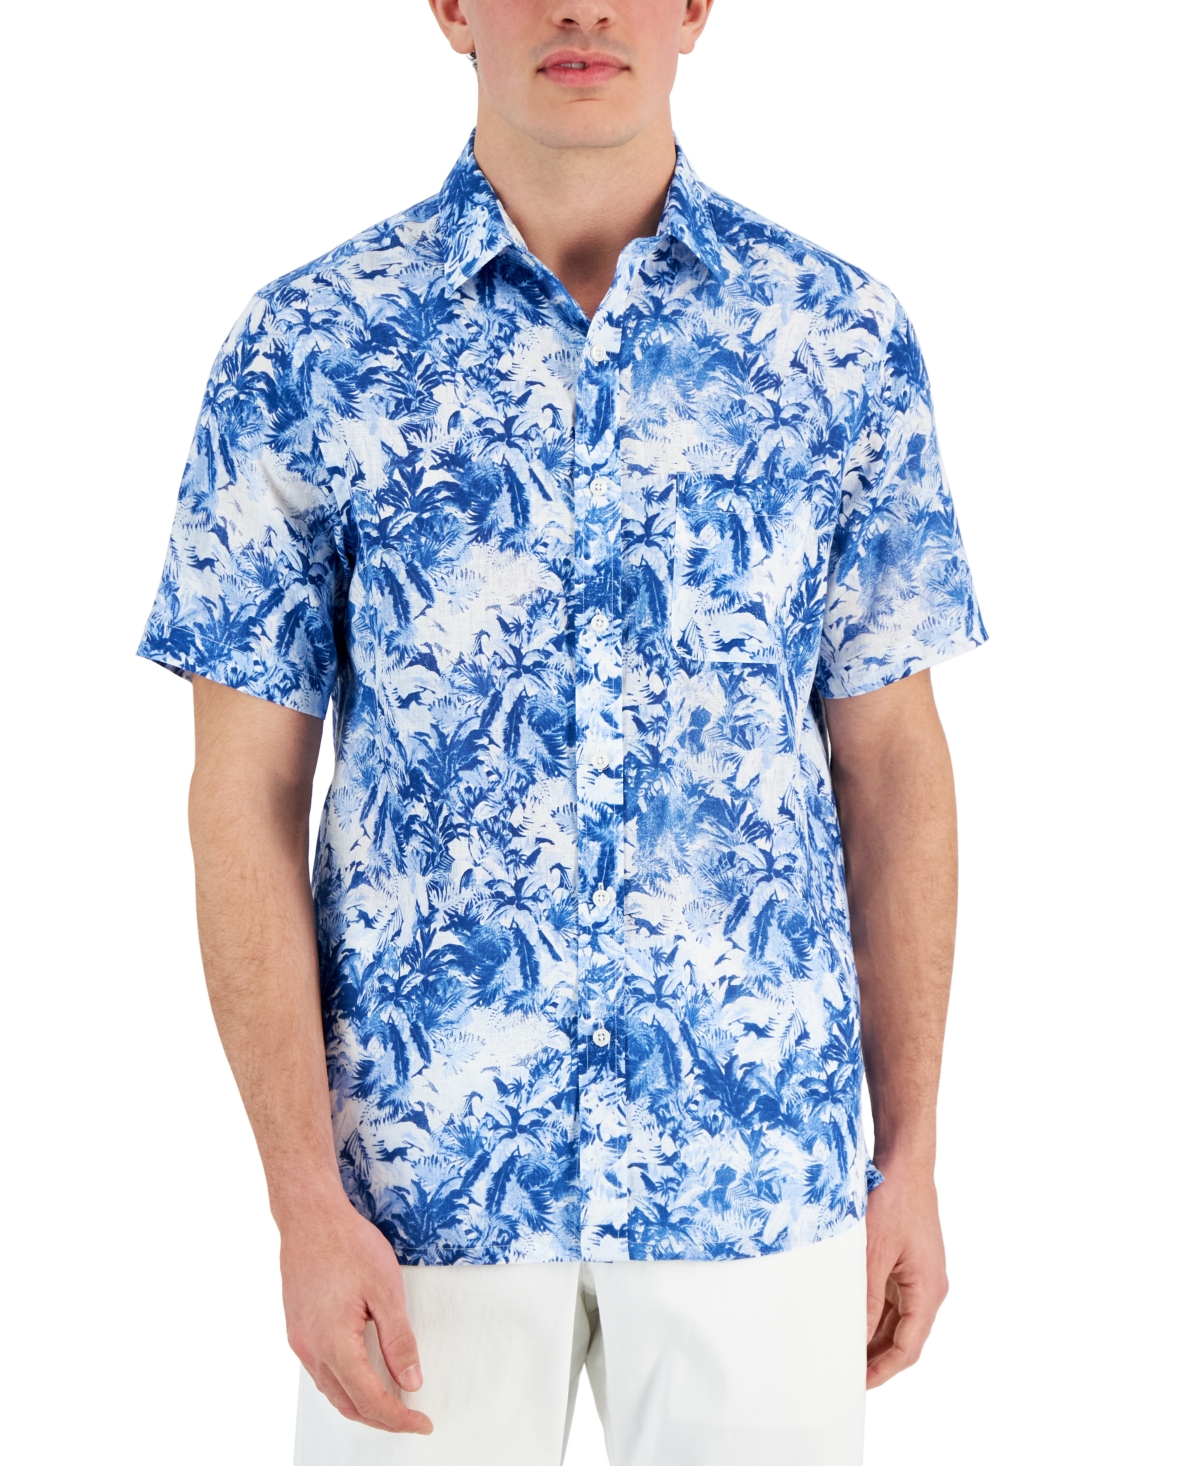 Men's Tropical Print Short-Sleeve Button-Front Linen Shirt, Created for Macy's - Alfresco Blue